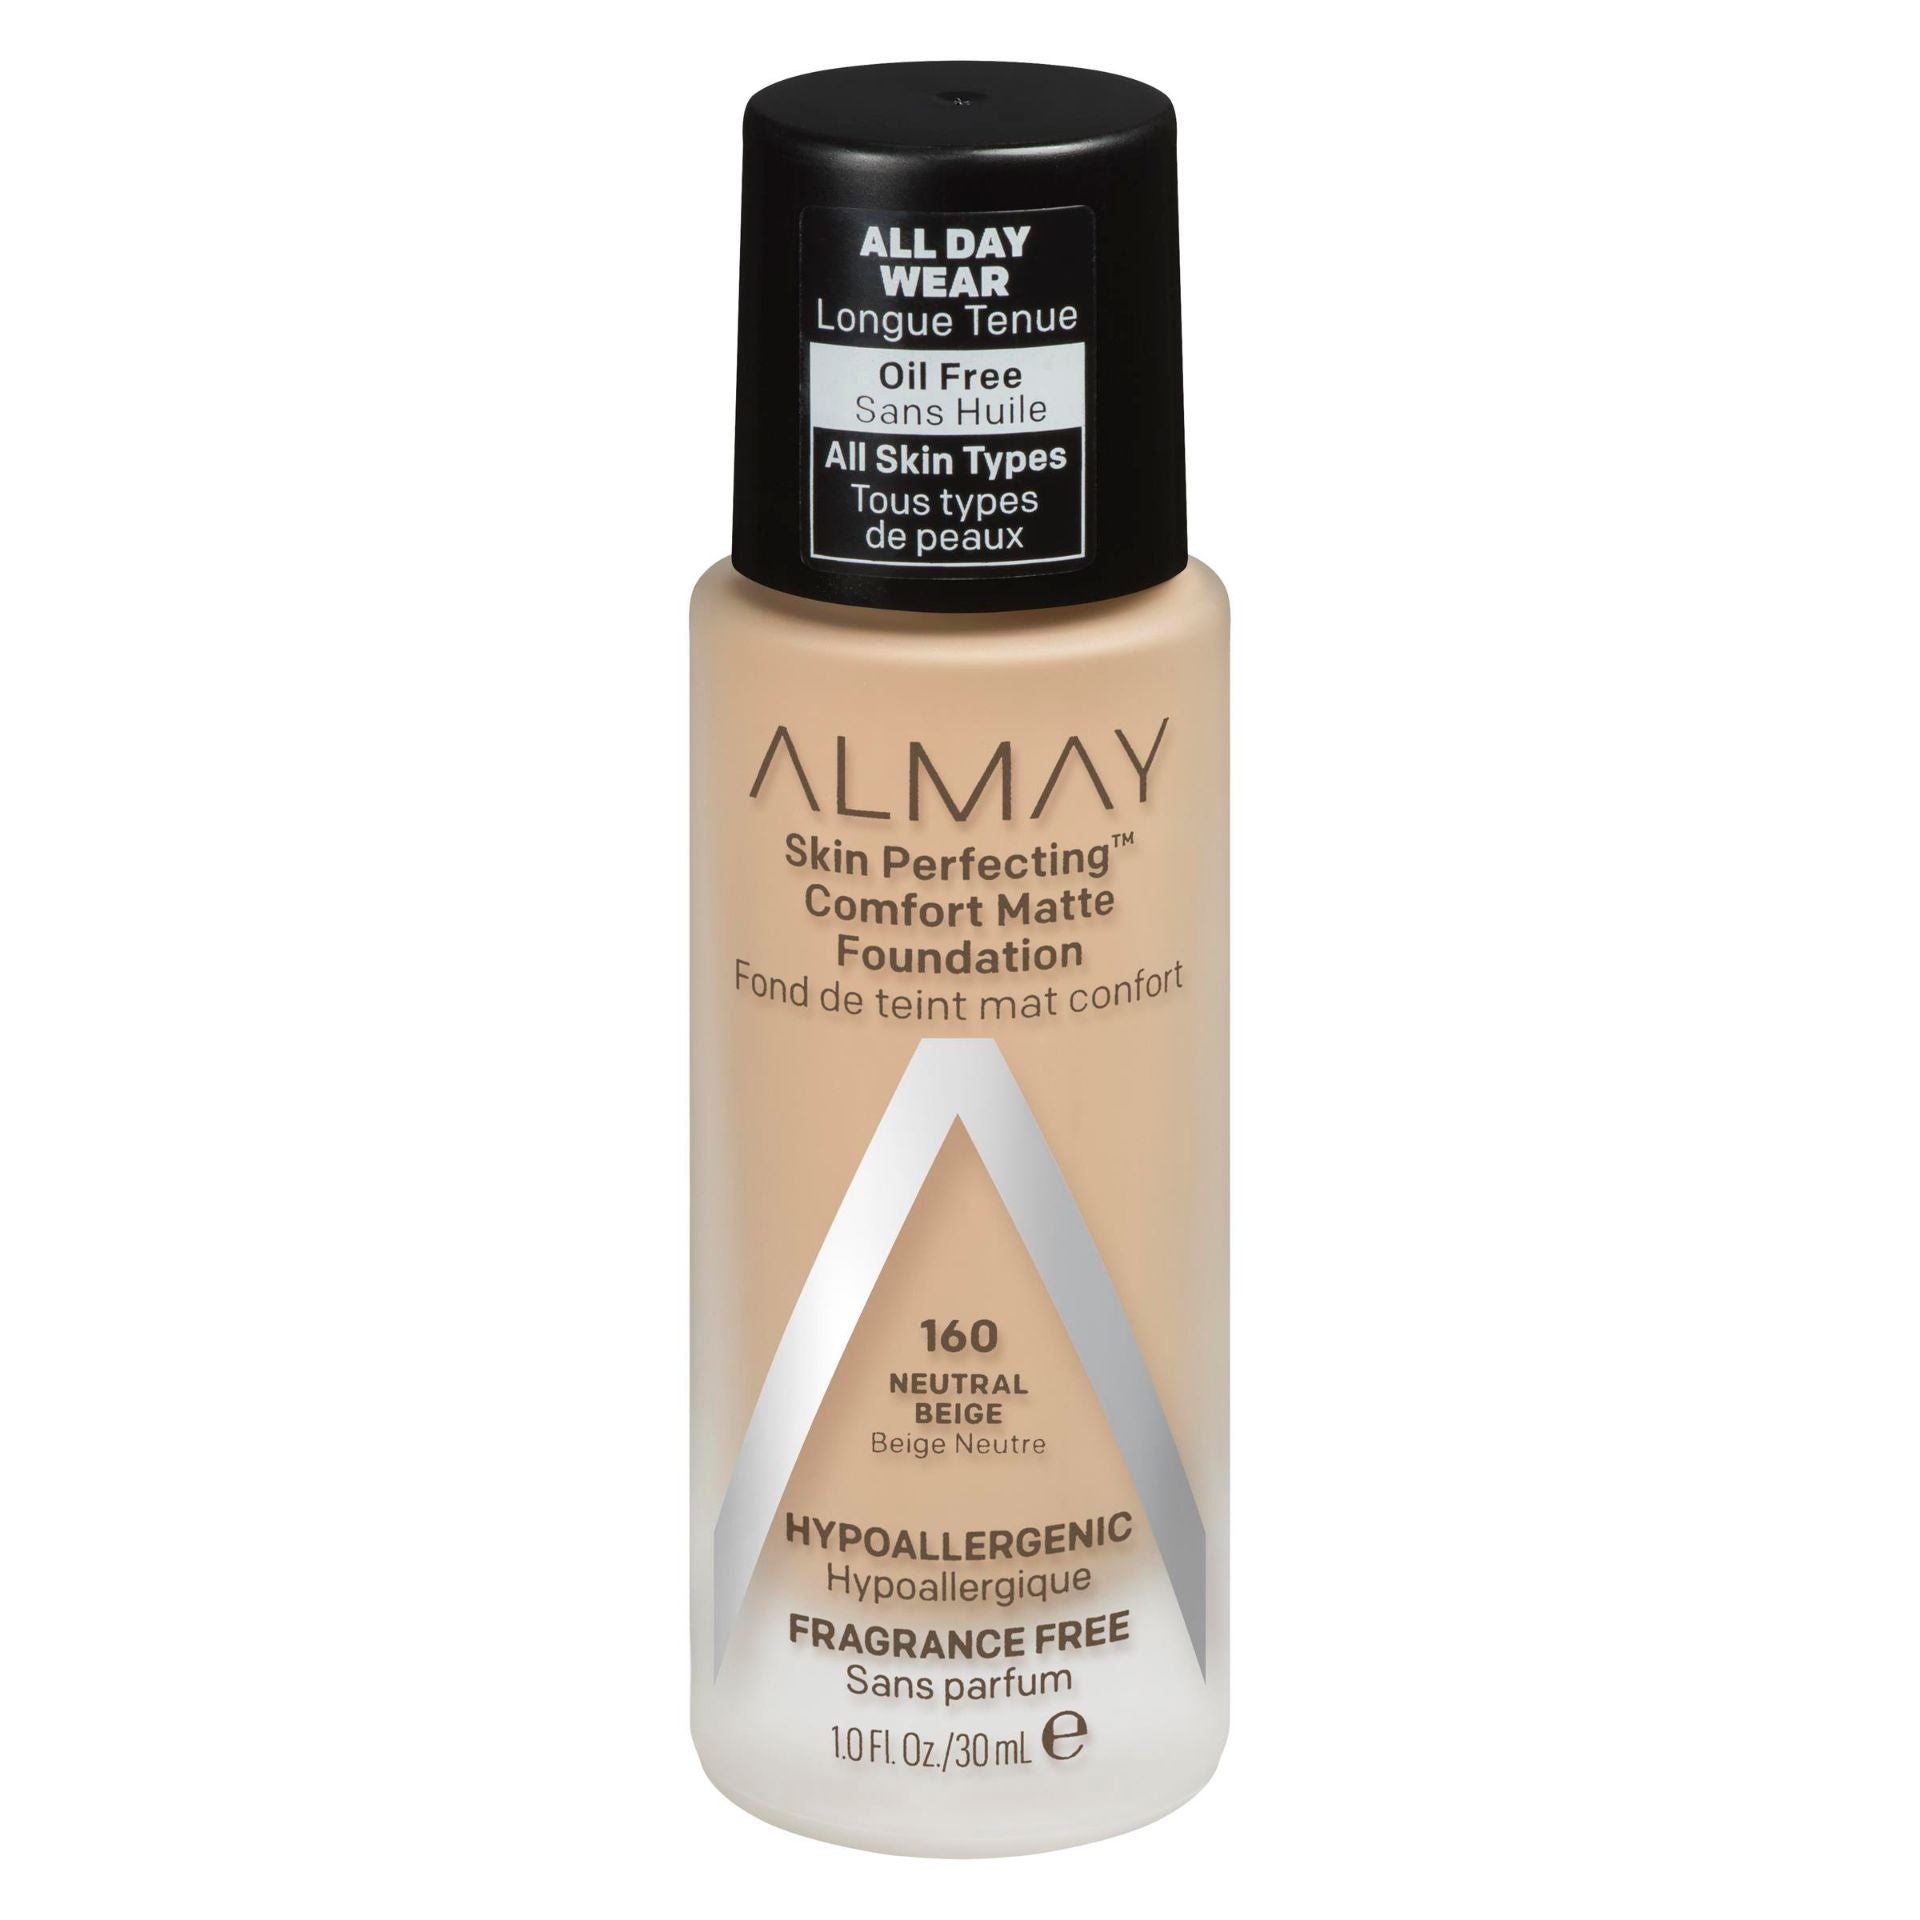 Almay Skin Perfecting Comfort Matte Foundation 30ml in 160 Neutral Beige